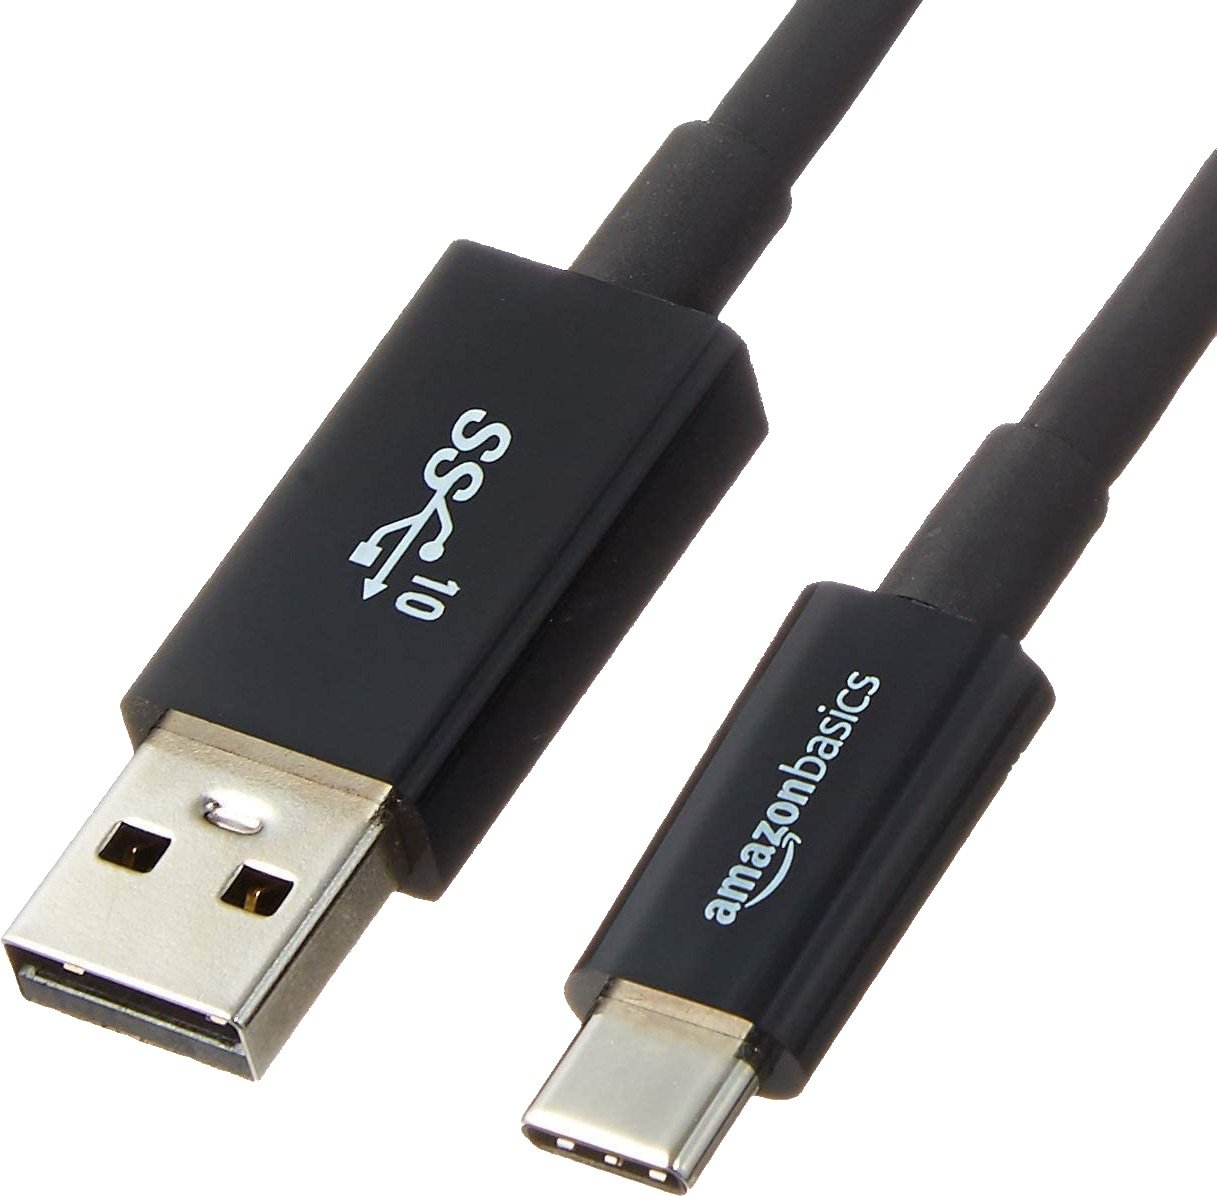 AmazonBasics USB 3.1 Cable Cropped Render